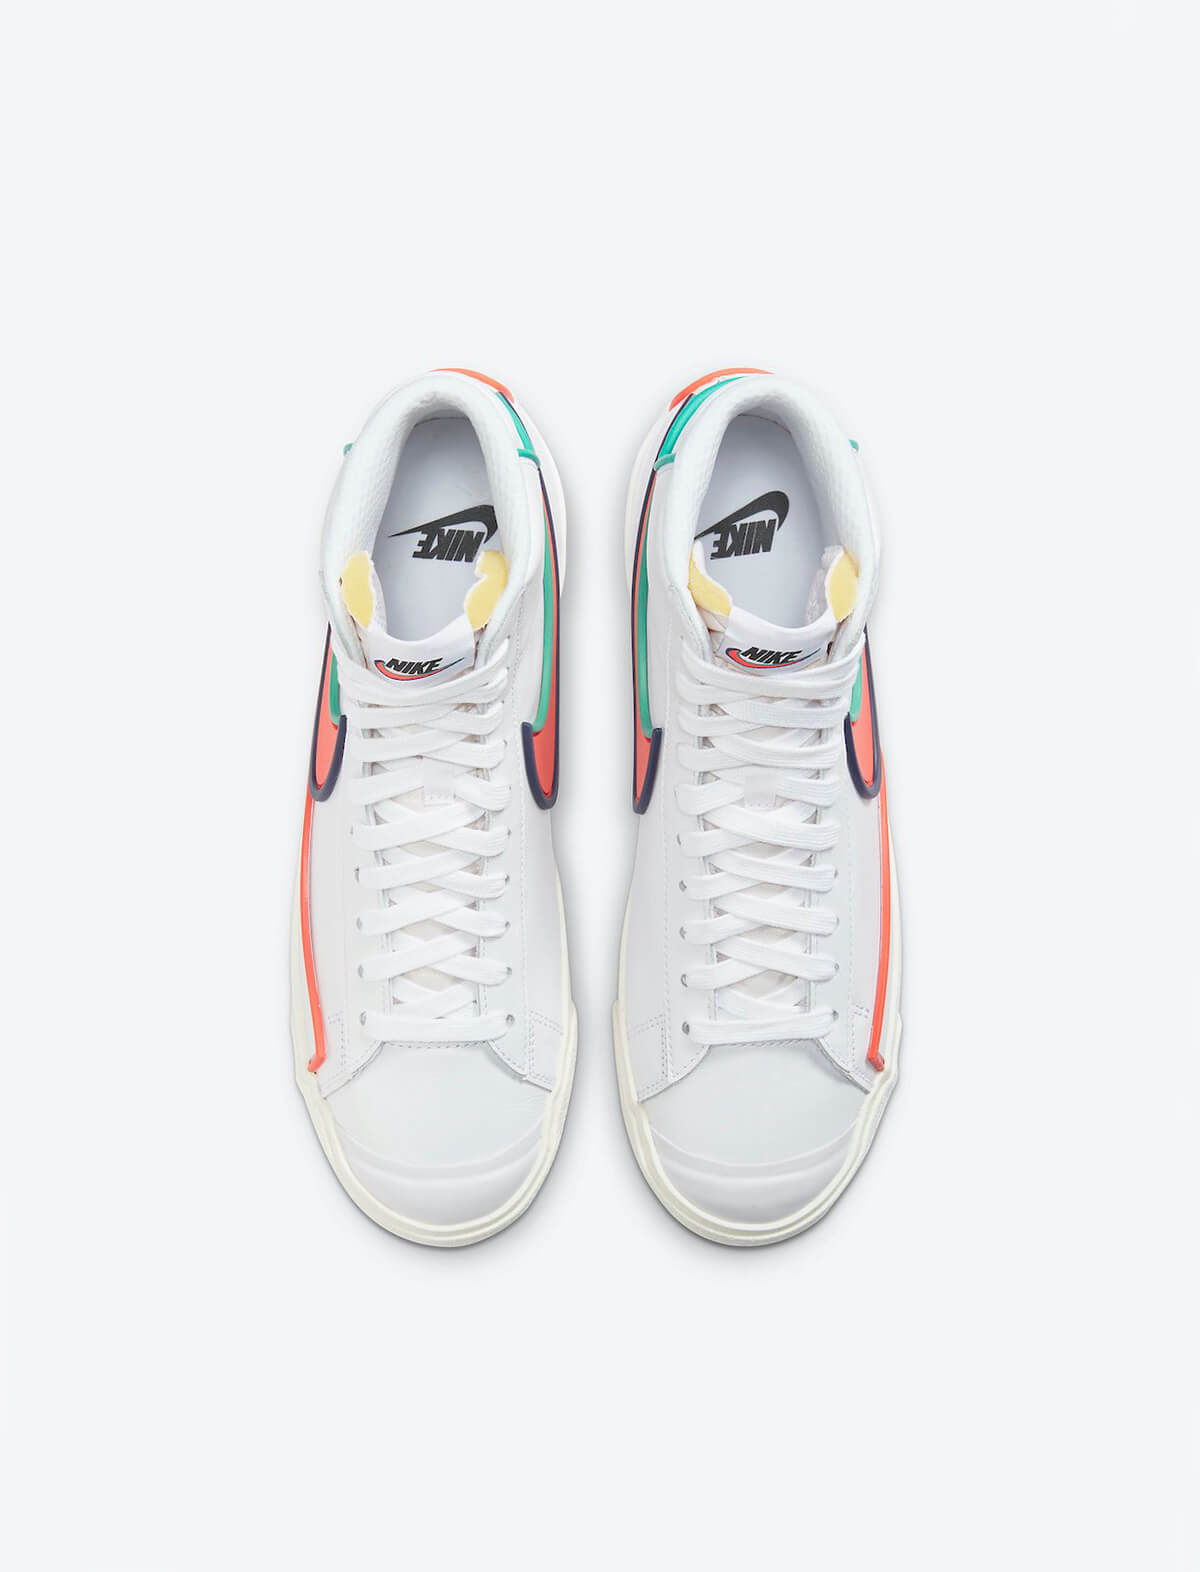 Nike Blazer Mid '77 Infinite Sneakers in Multicolor